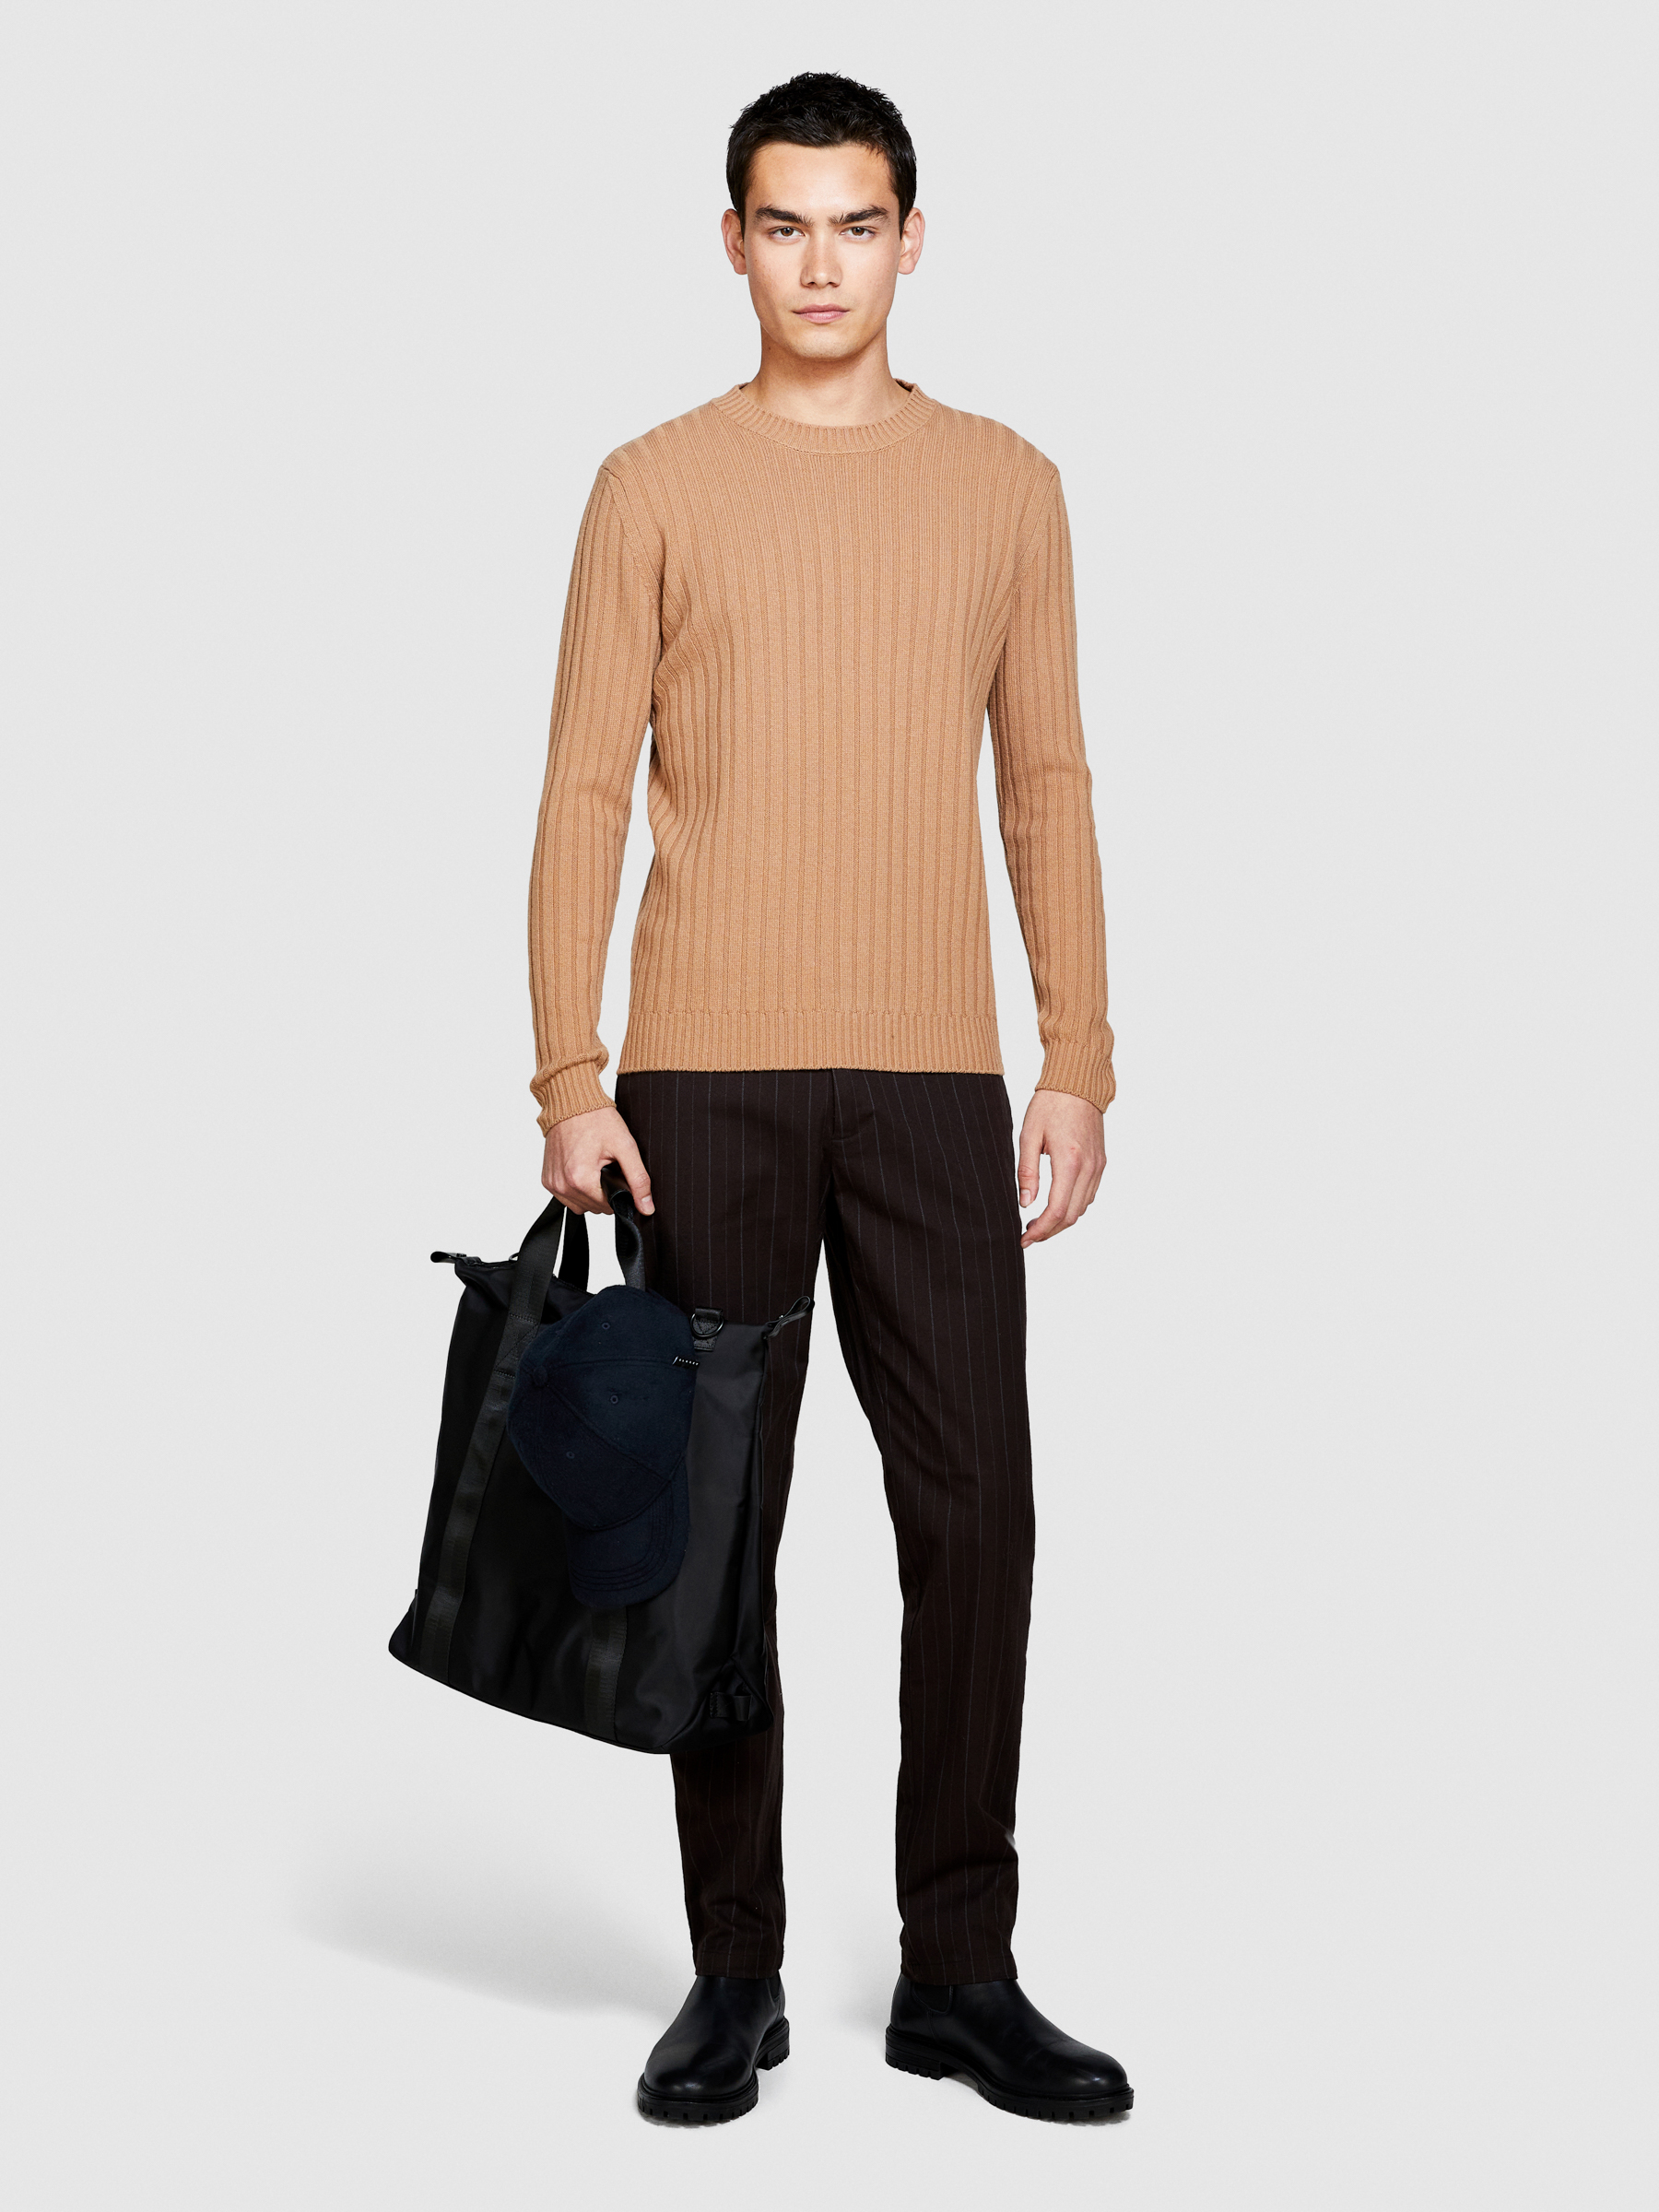 Sisley - 100% Virgin Wool Sweater, Man, Camel, Size: XL